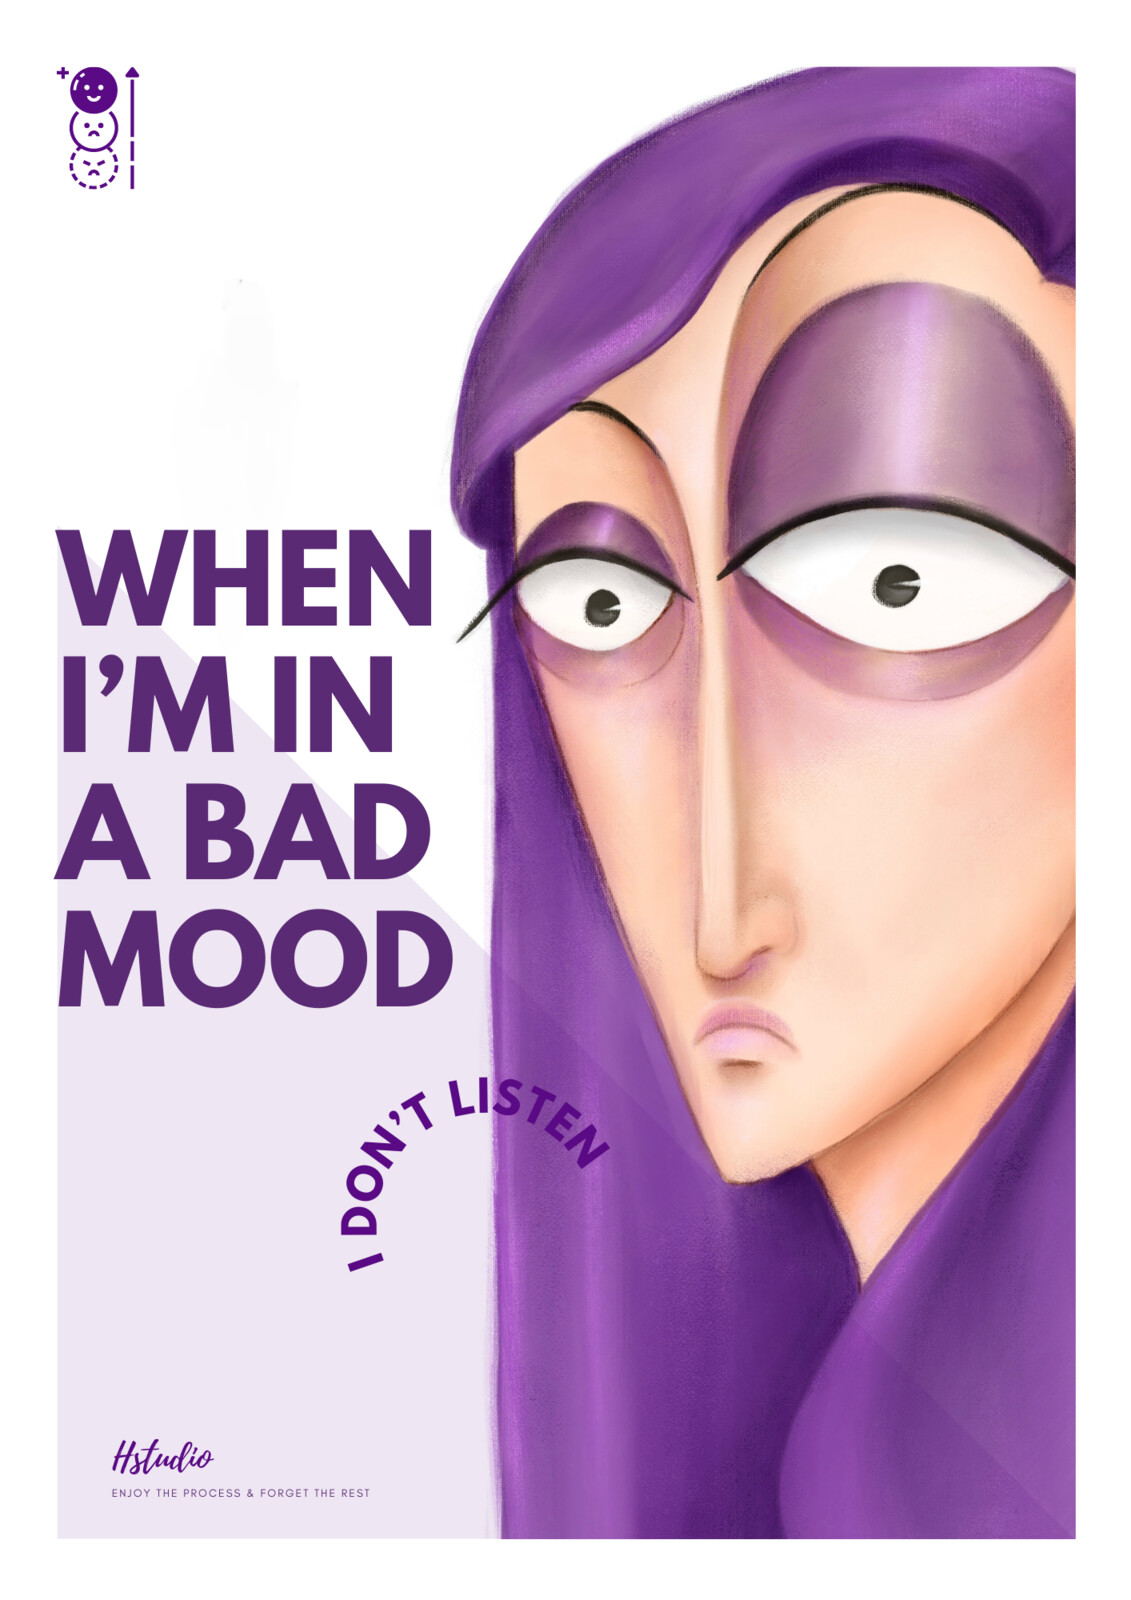 Bad Mood Handcrafted artistic illustration